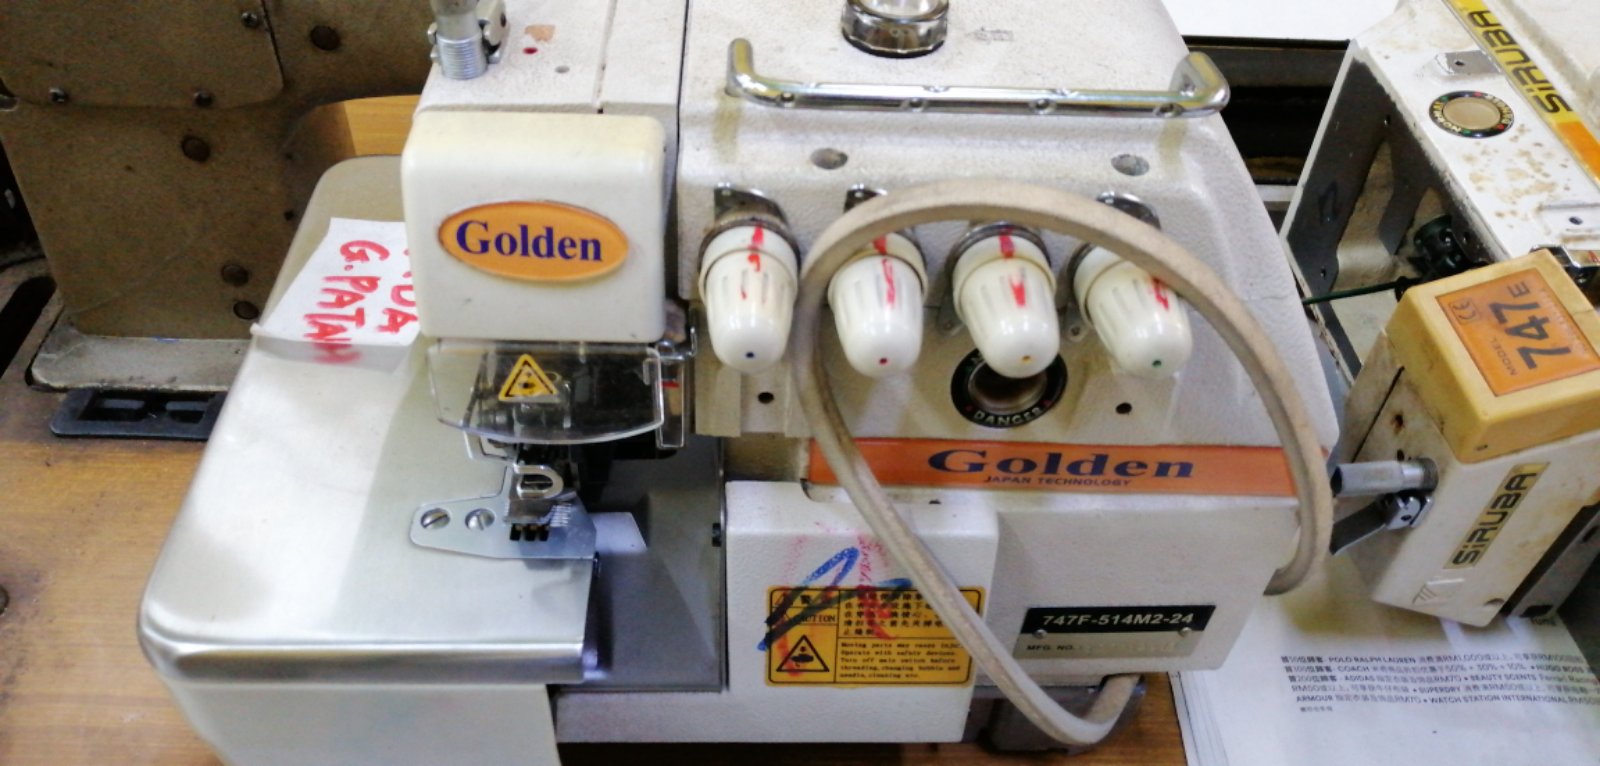 Repair Sevis Golden Overlock Sewing machine